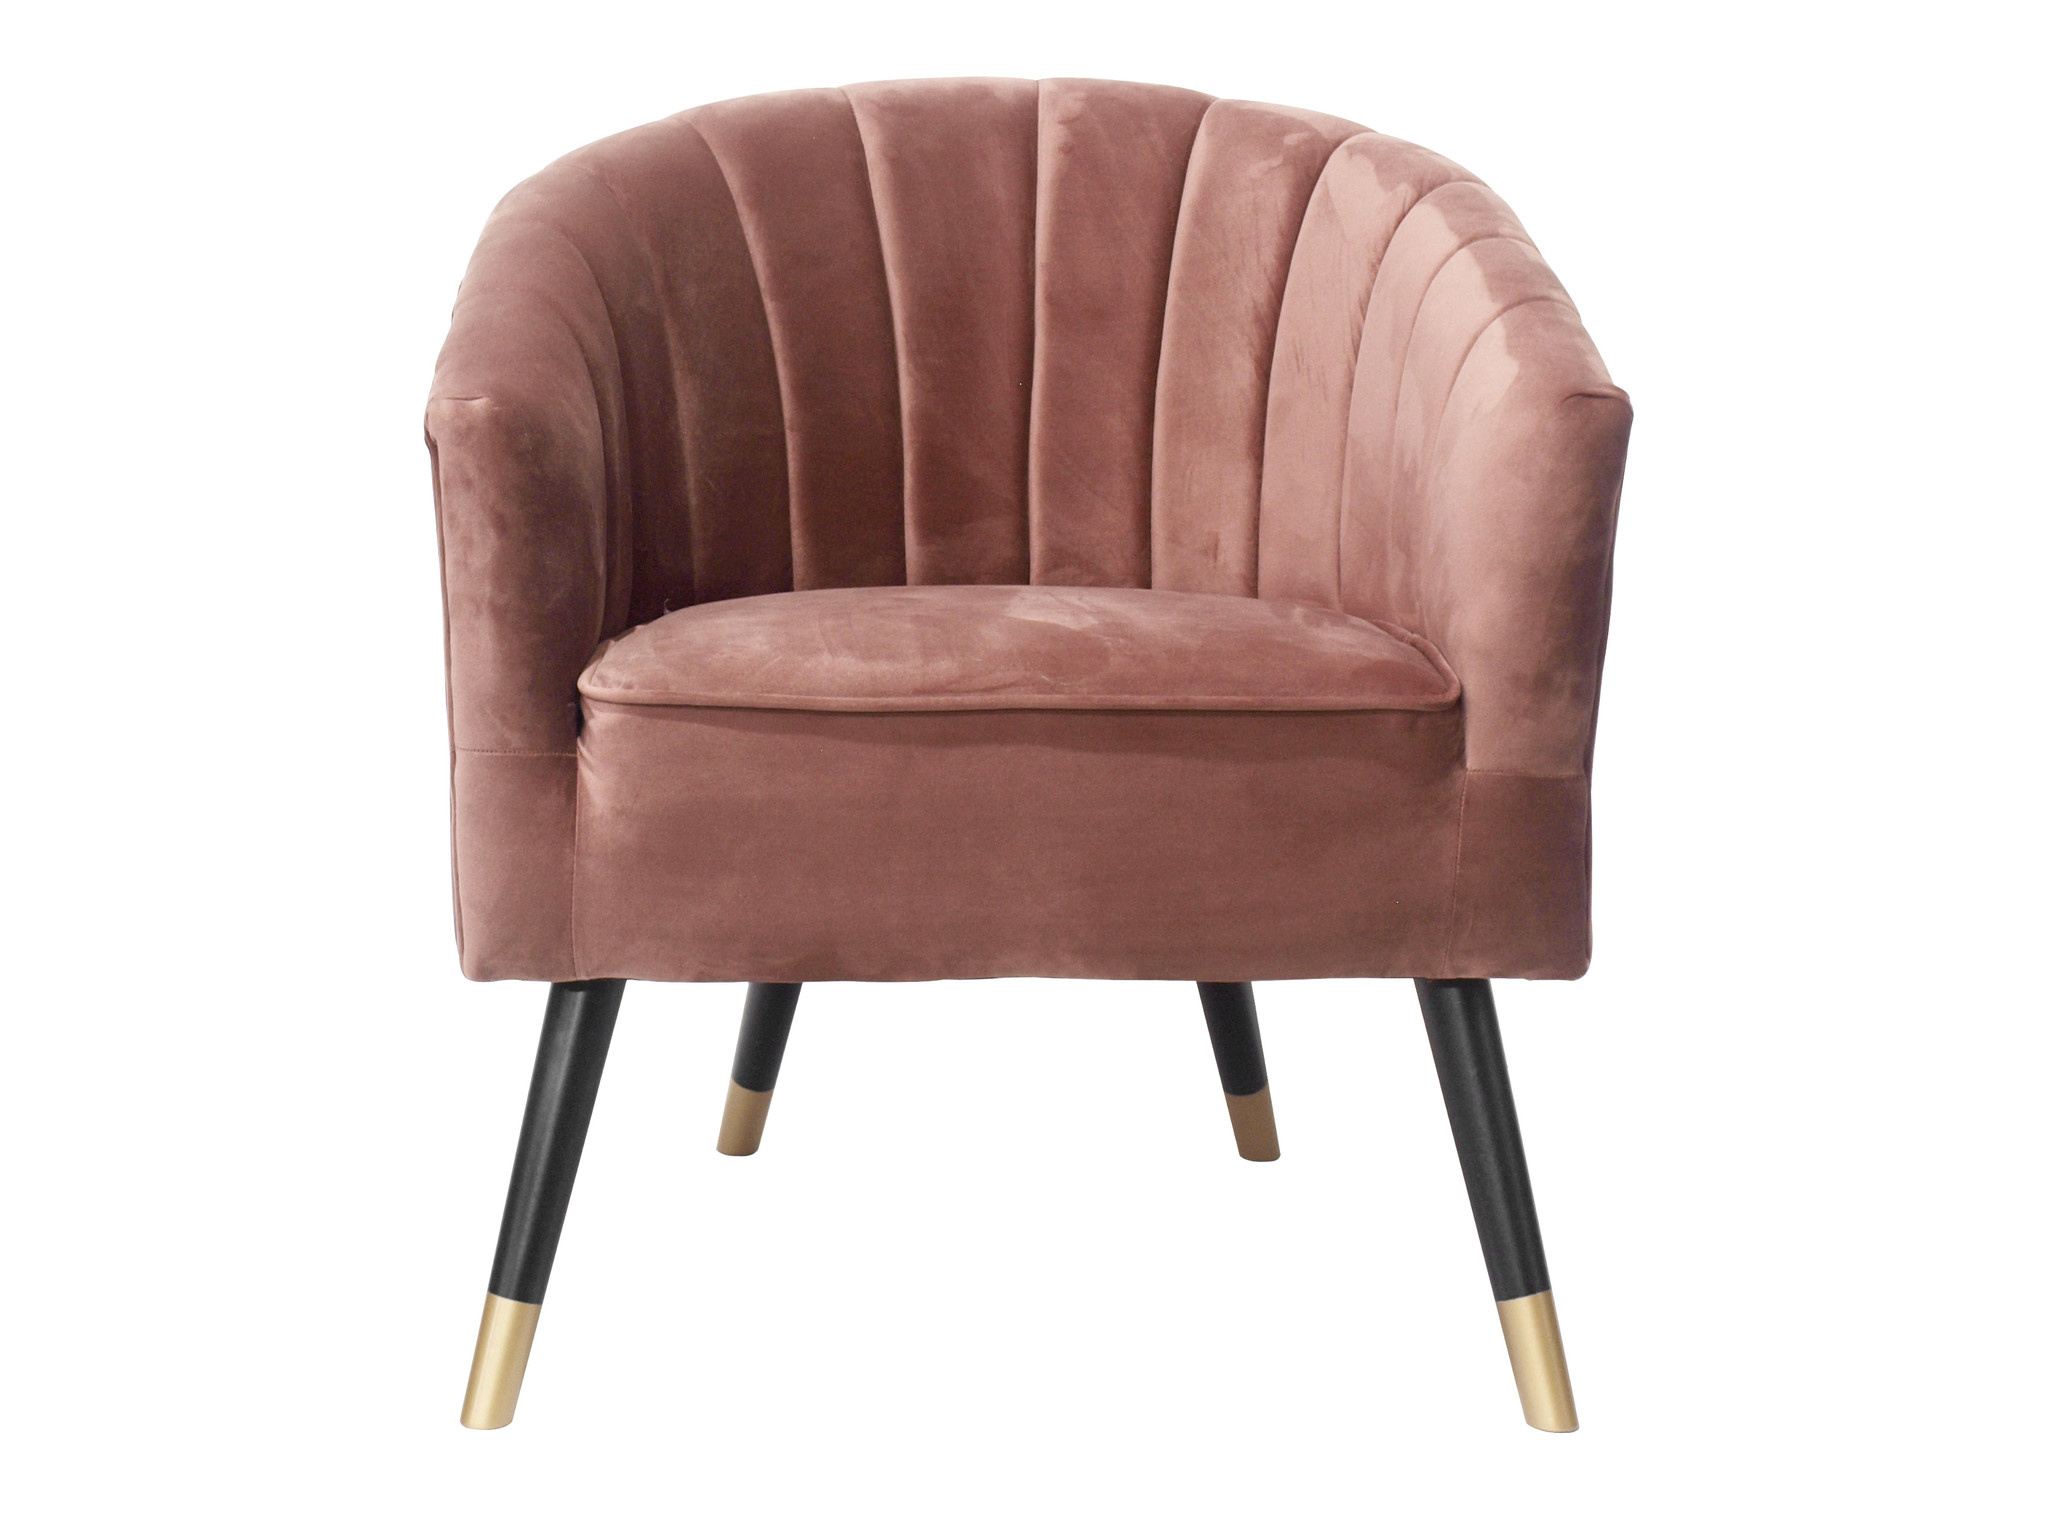 Opmerkelijk koppel Regenjas Leitmotiv stoel Royal velvet roze